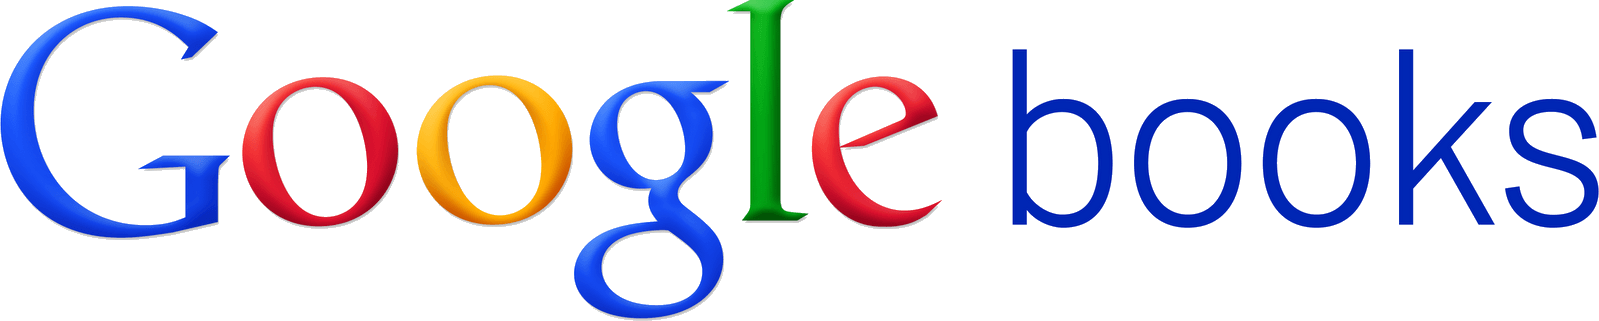 Google Books Logo - Google Books | Logopedia | FANDOM powered by Wikia